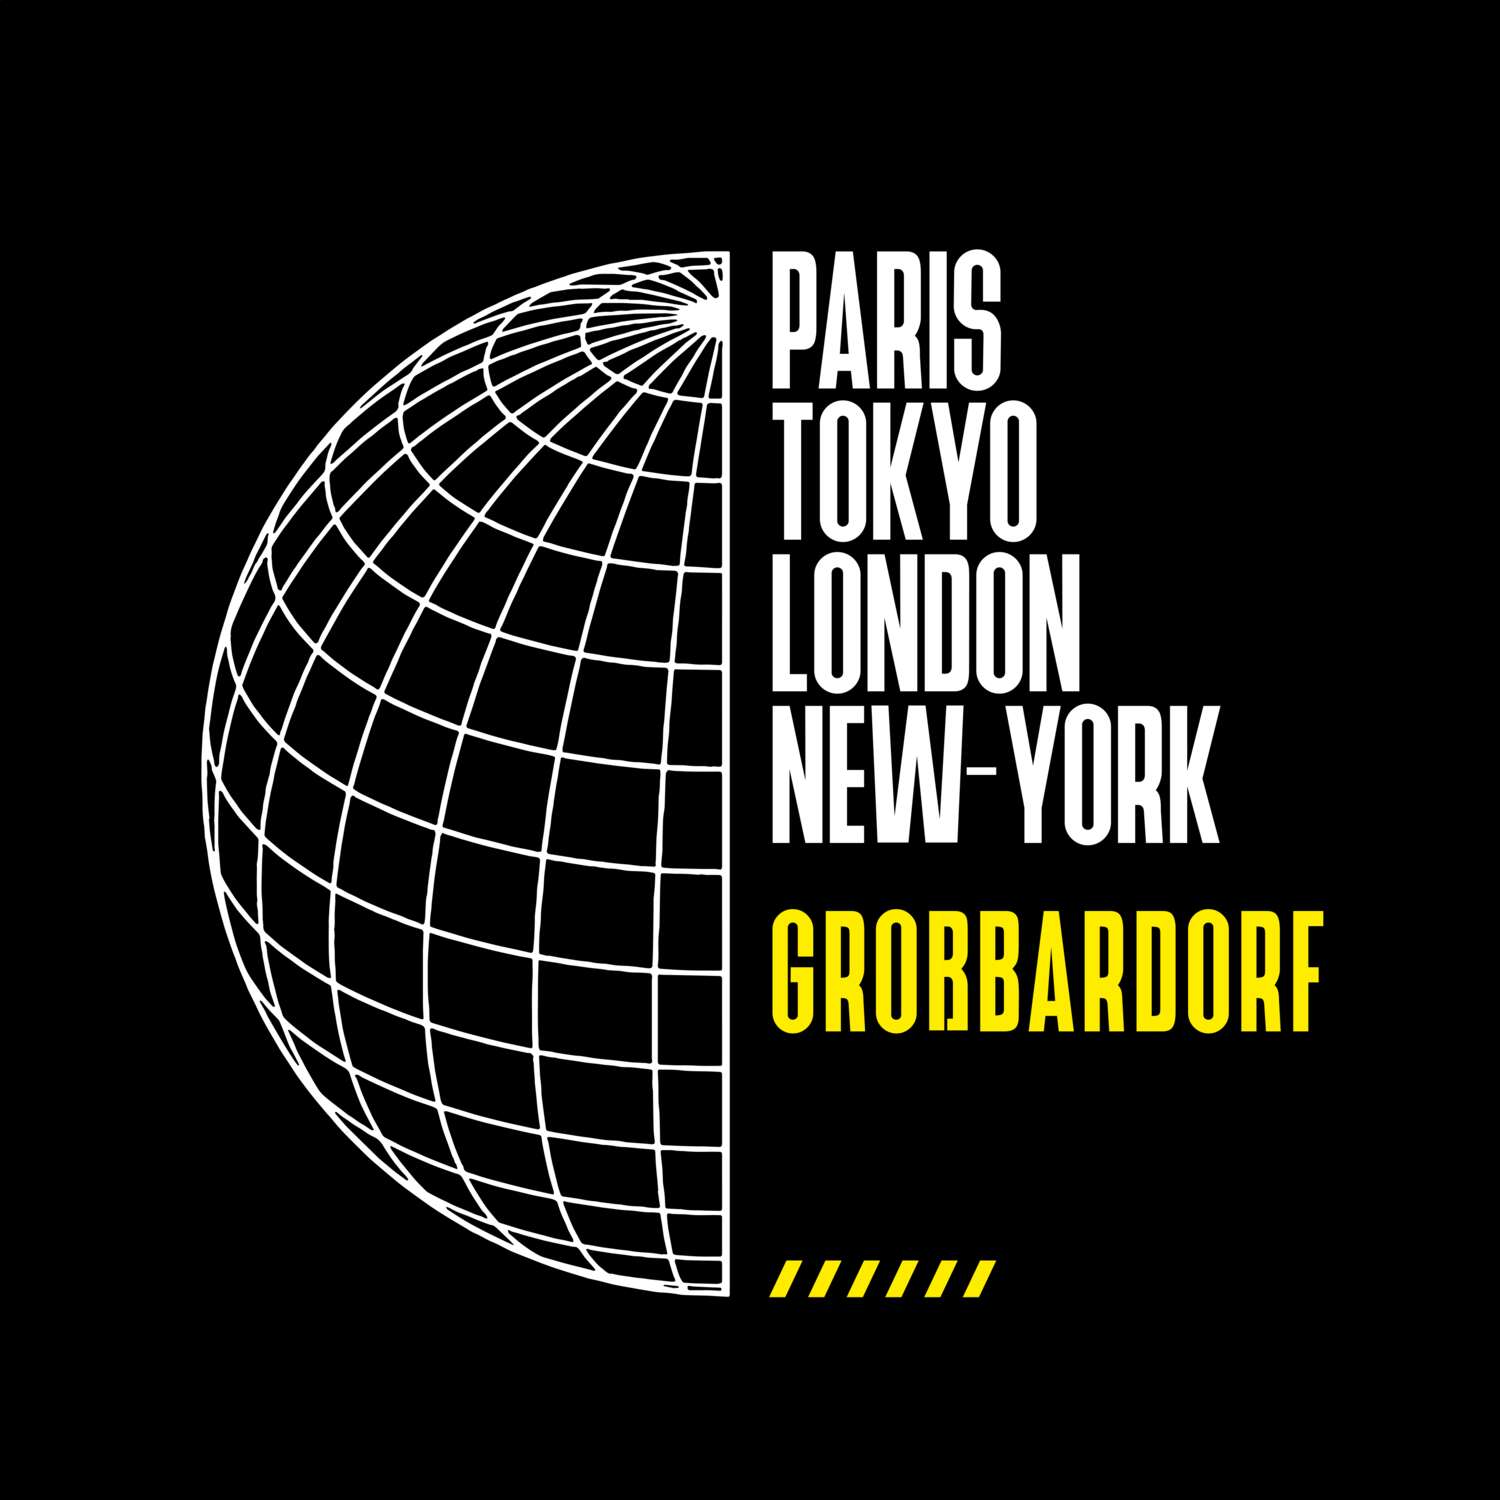 Großbardorf T-Shirt »Paris Tokyo London«